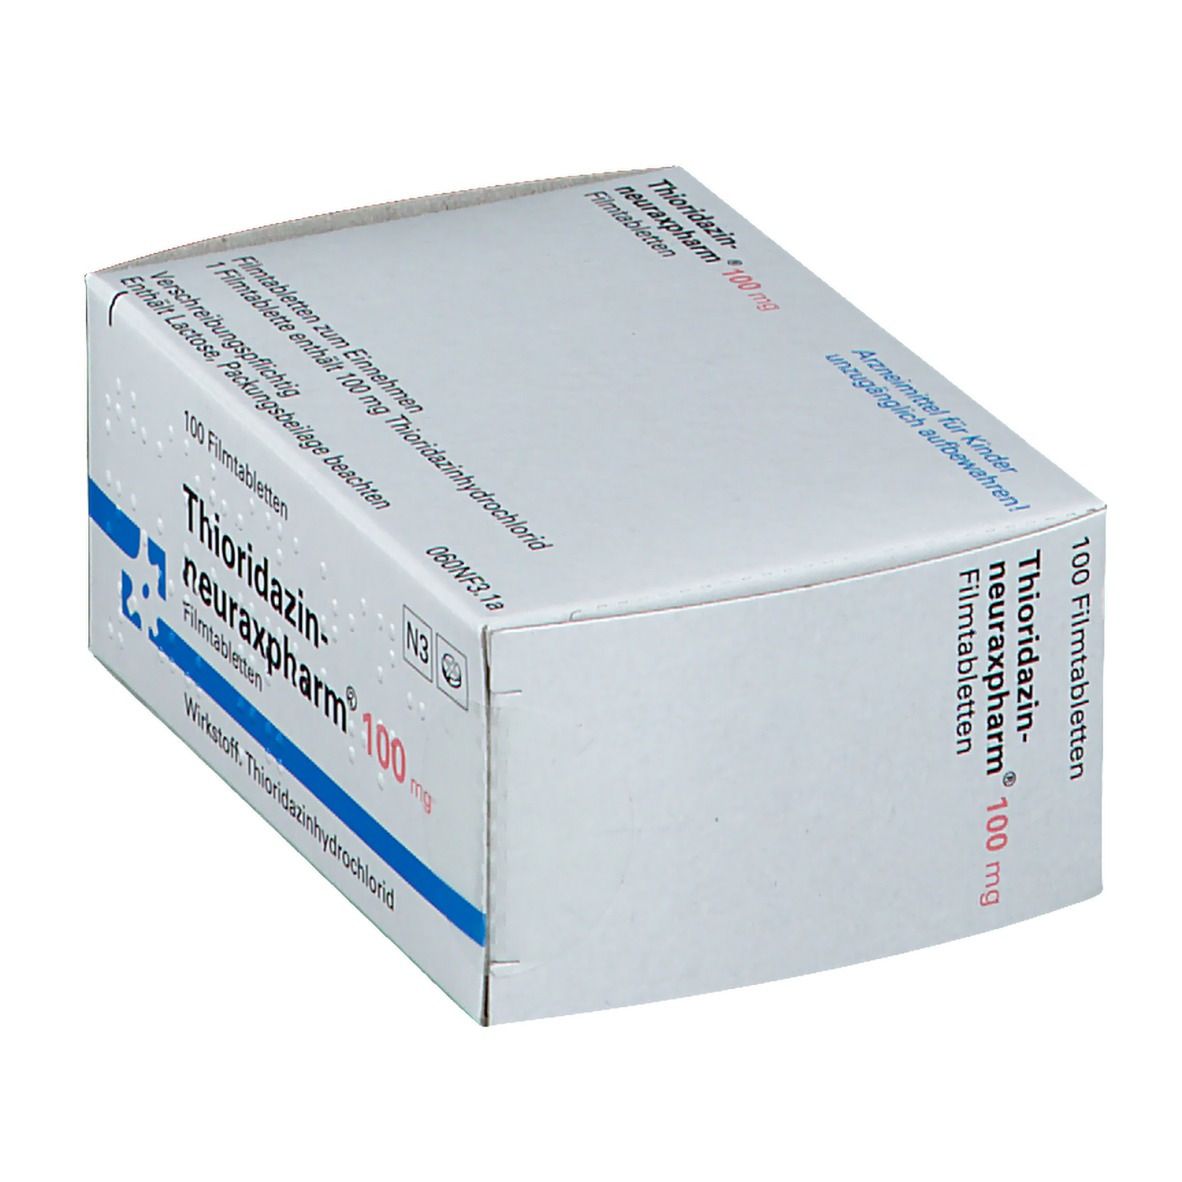 Thioridazin-neuraxpharm® 100 mg